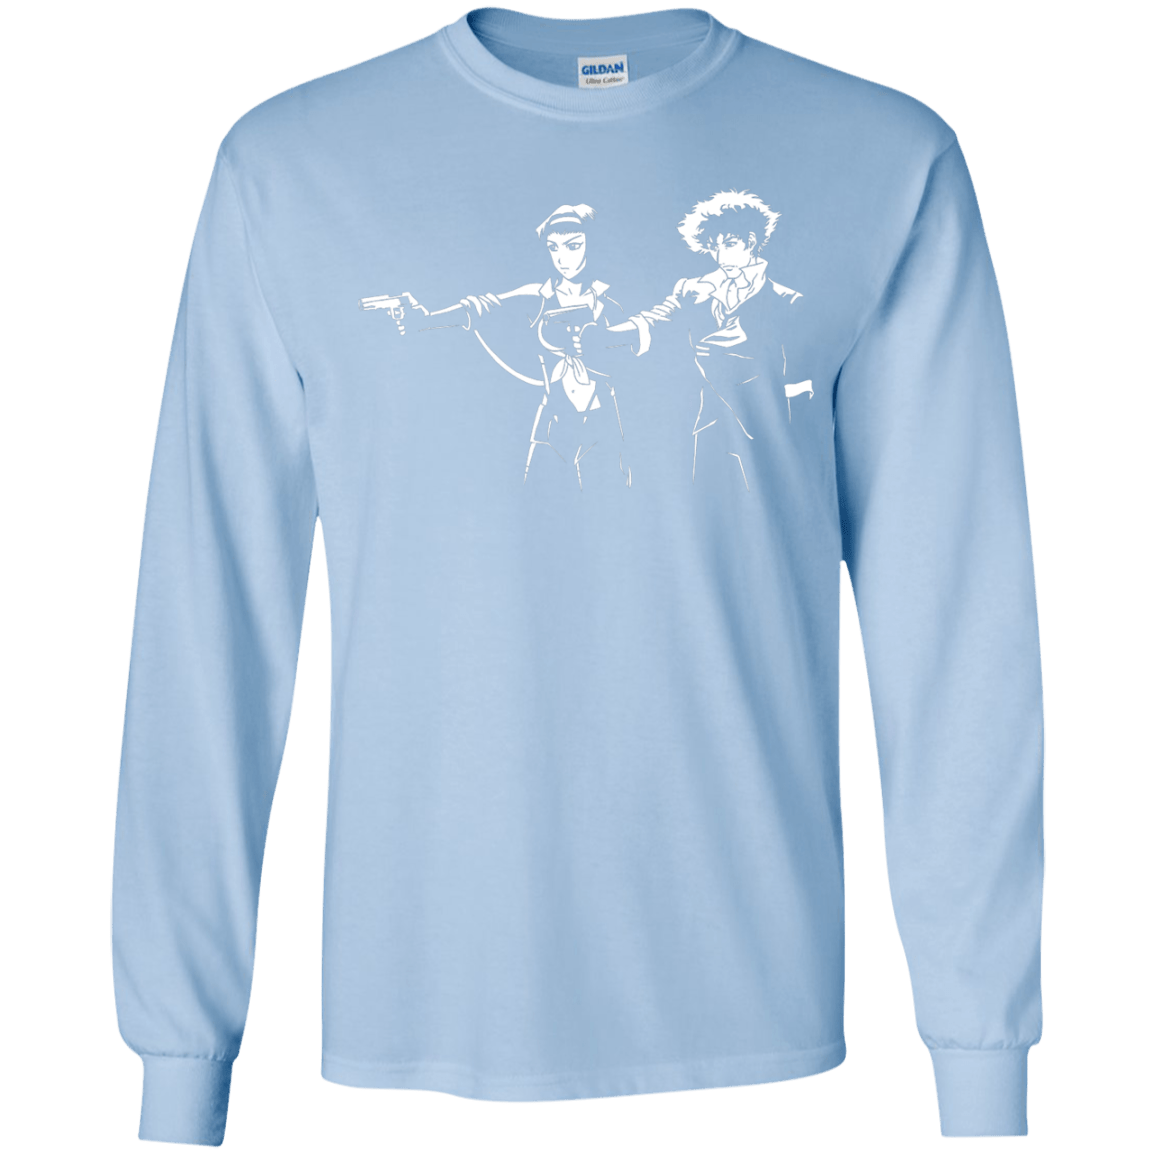 Cowboy Fiction Youth Long Sleeve T-Shirt